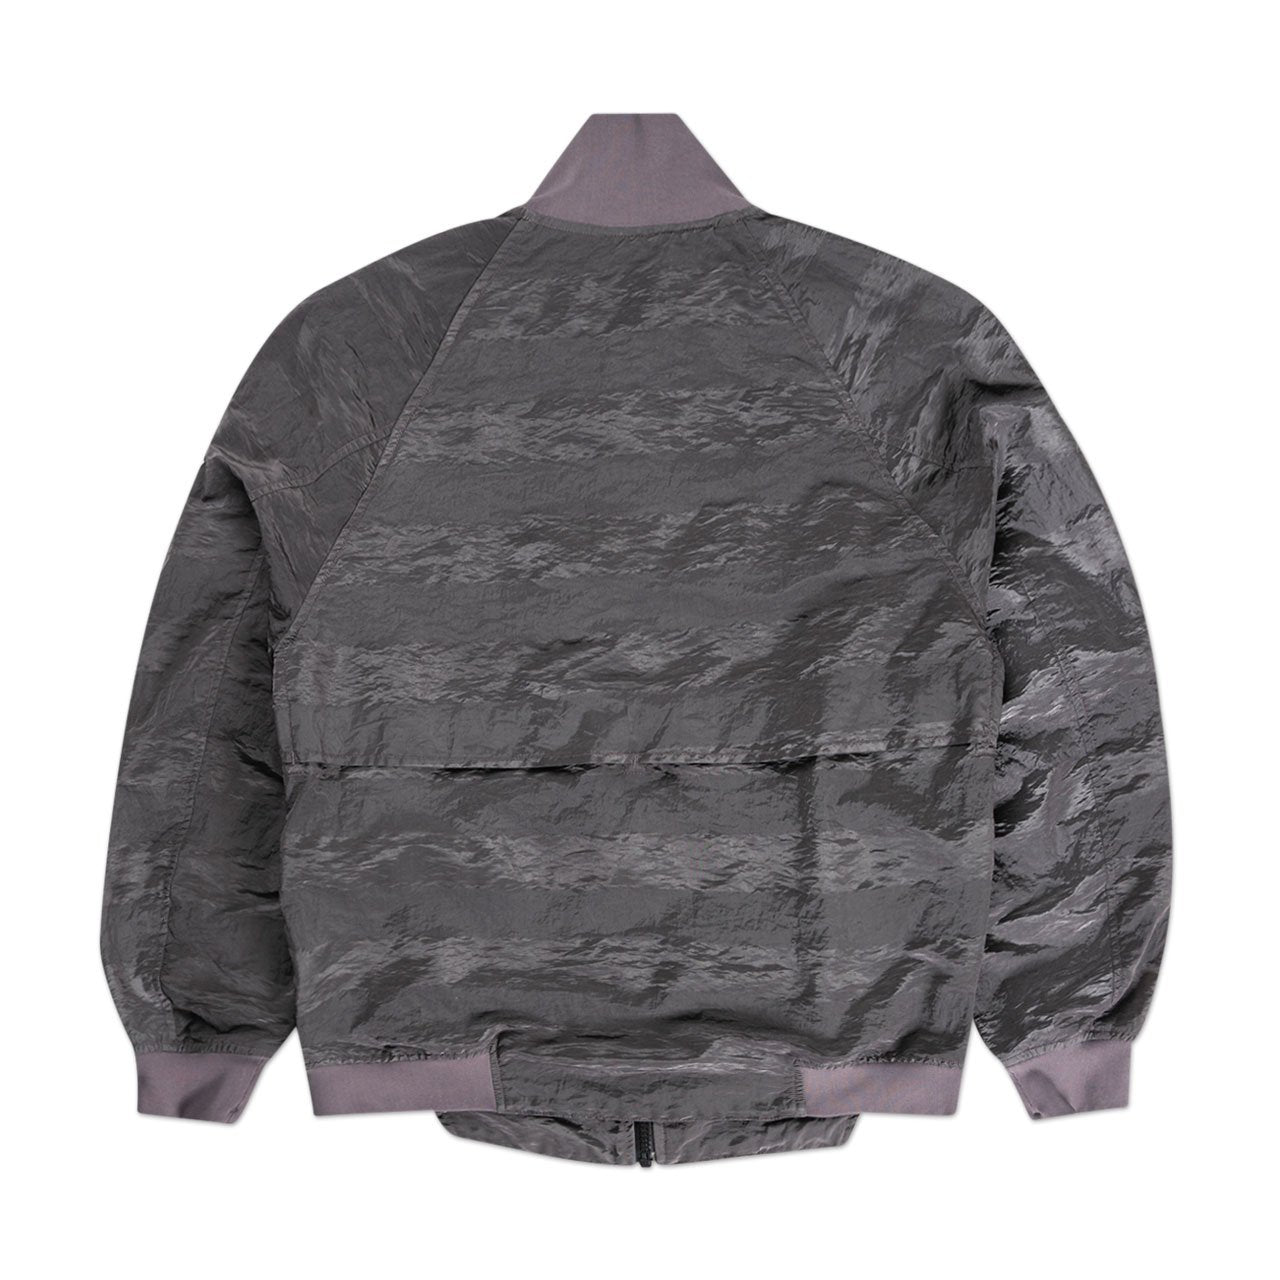 stone island shadow project nylon metal jacket (dark grey) - 721940701.v0063 - a.plus - Image - 2